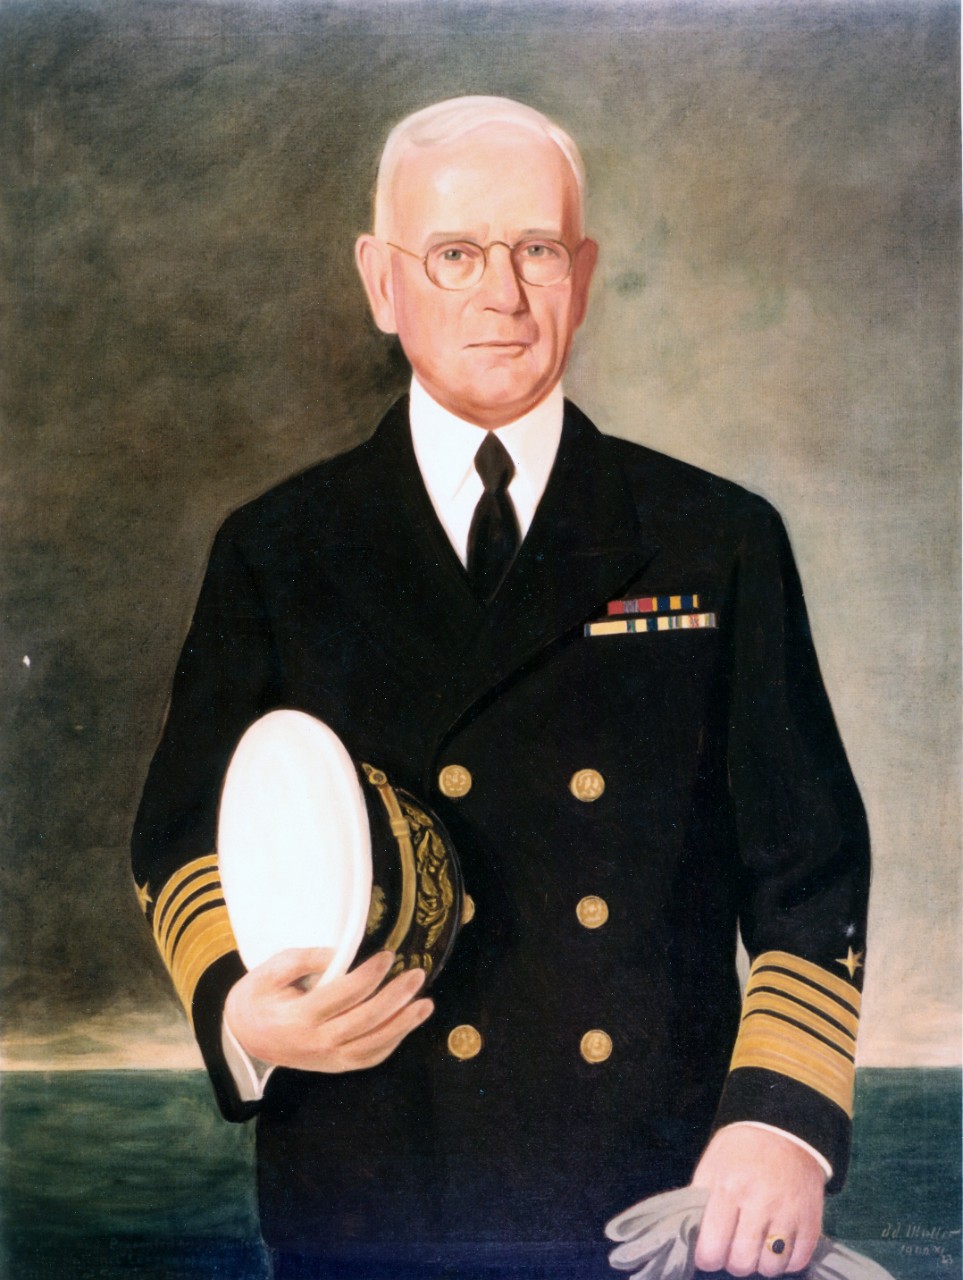 Admiral William H. Standley, USN